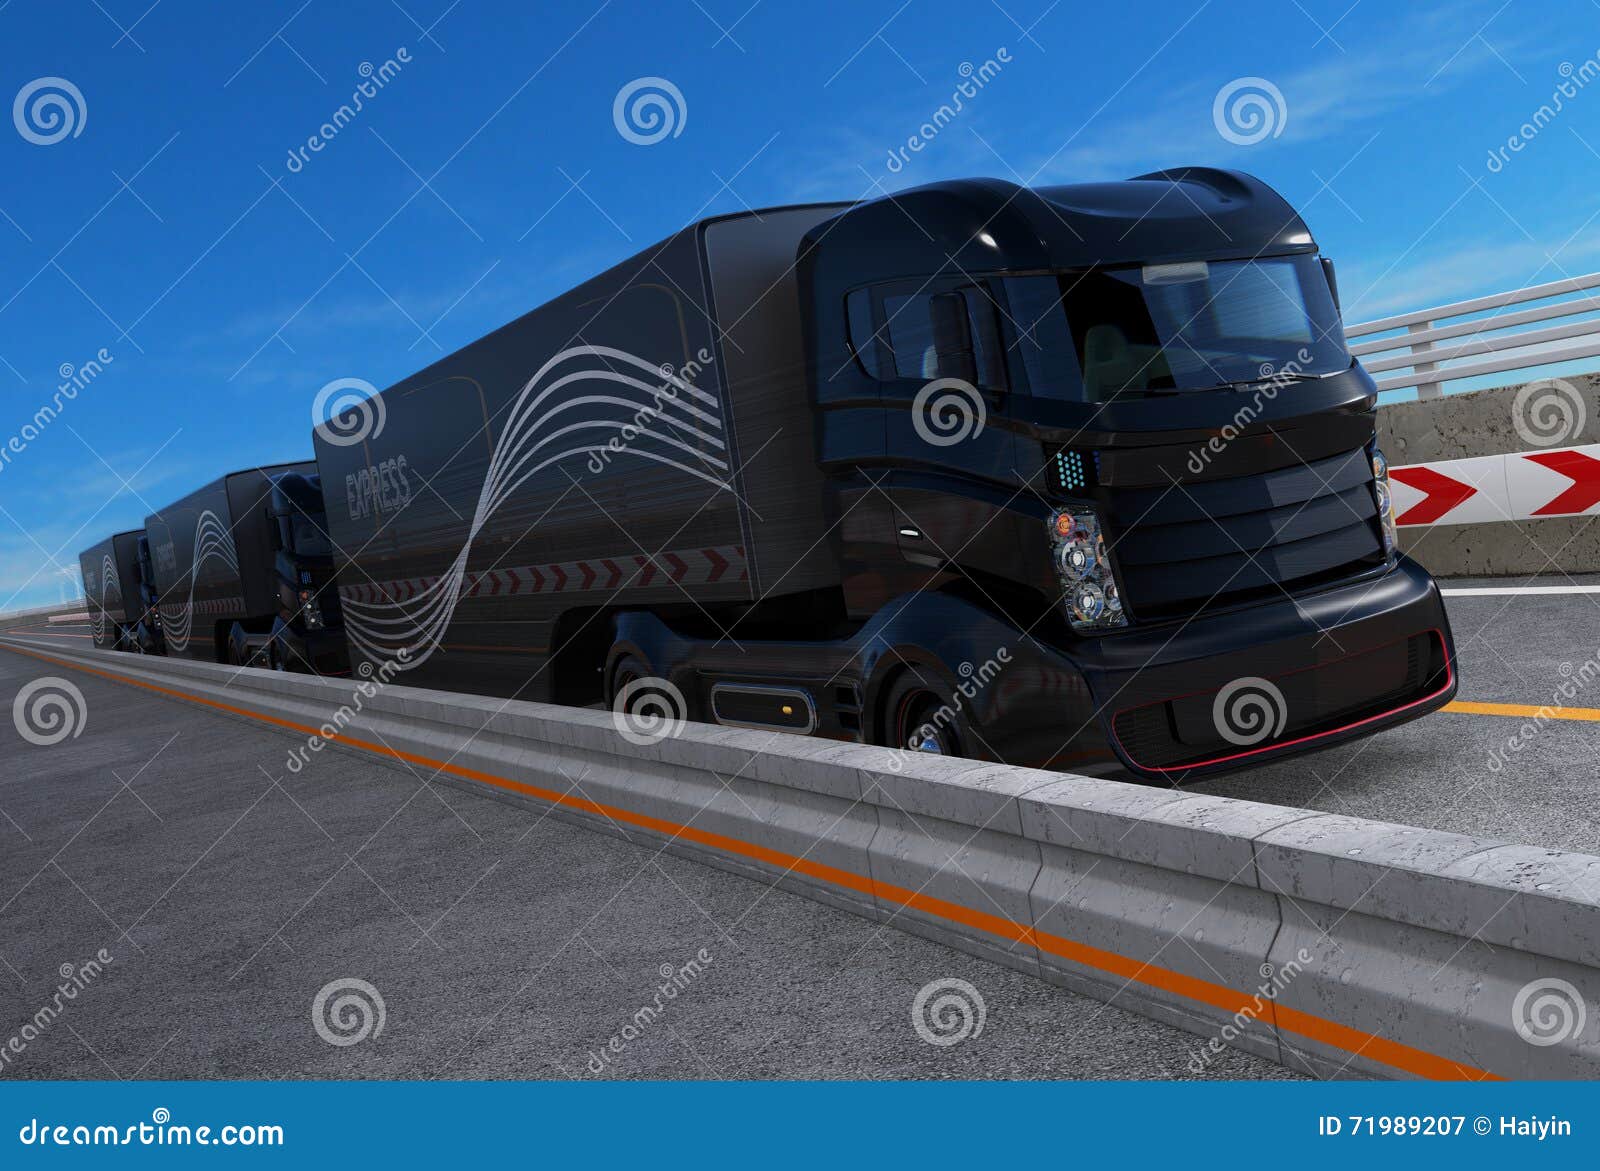 platoon driving of autonomous hybrid trucks driving on highway